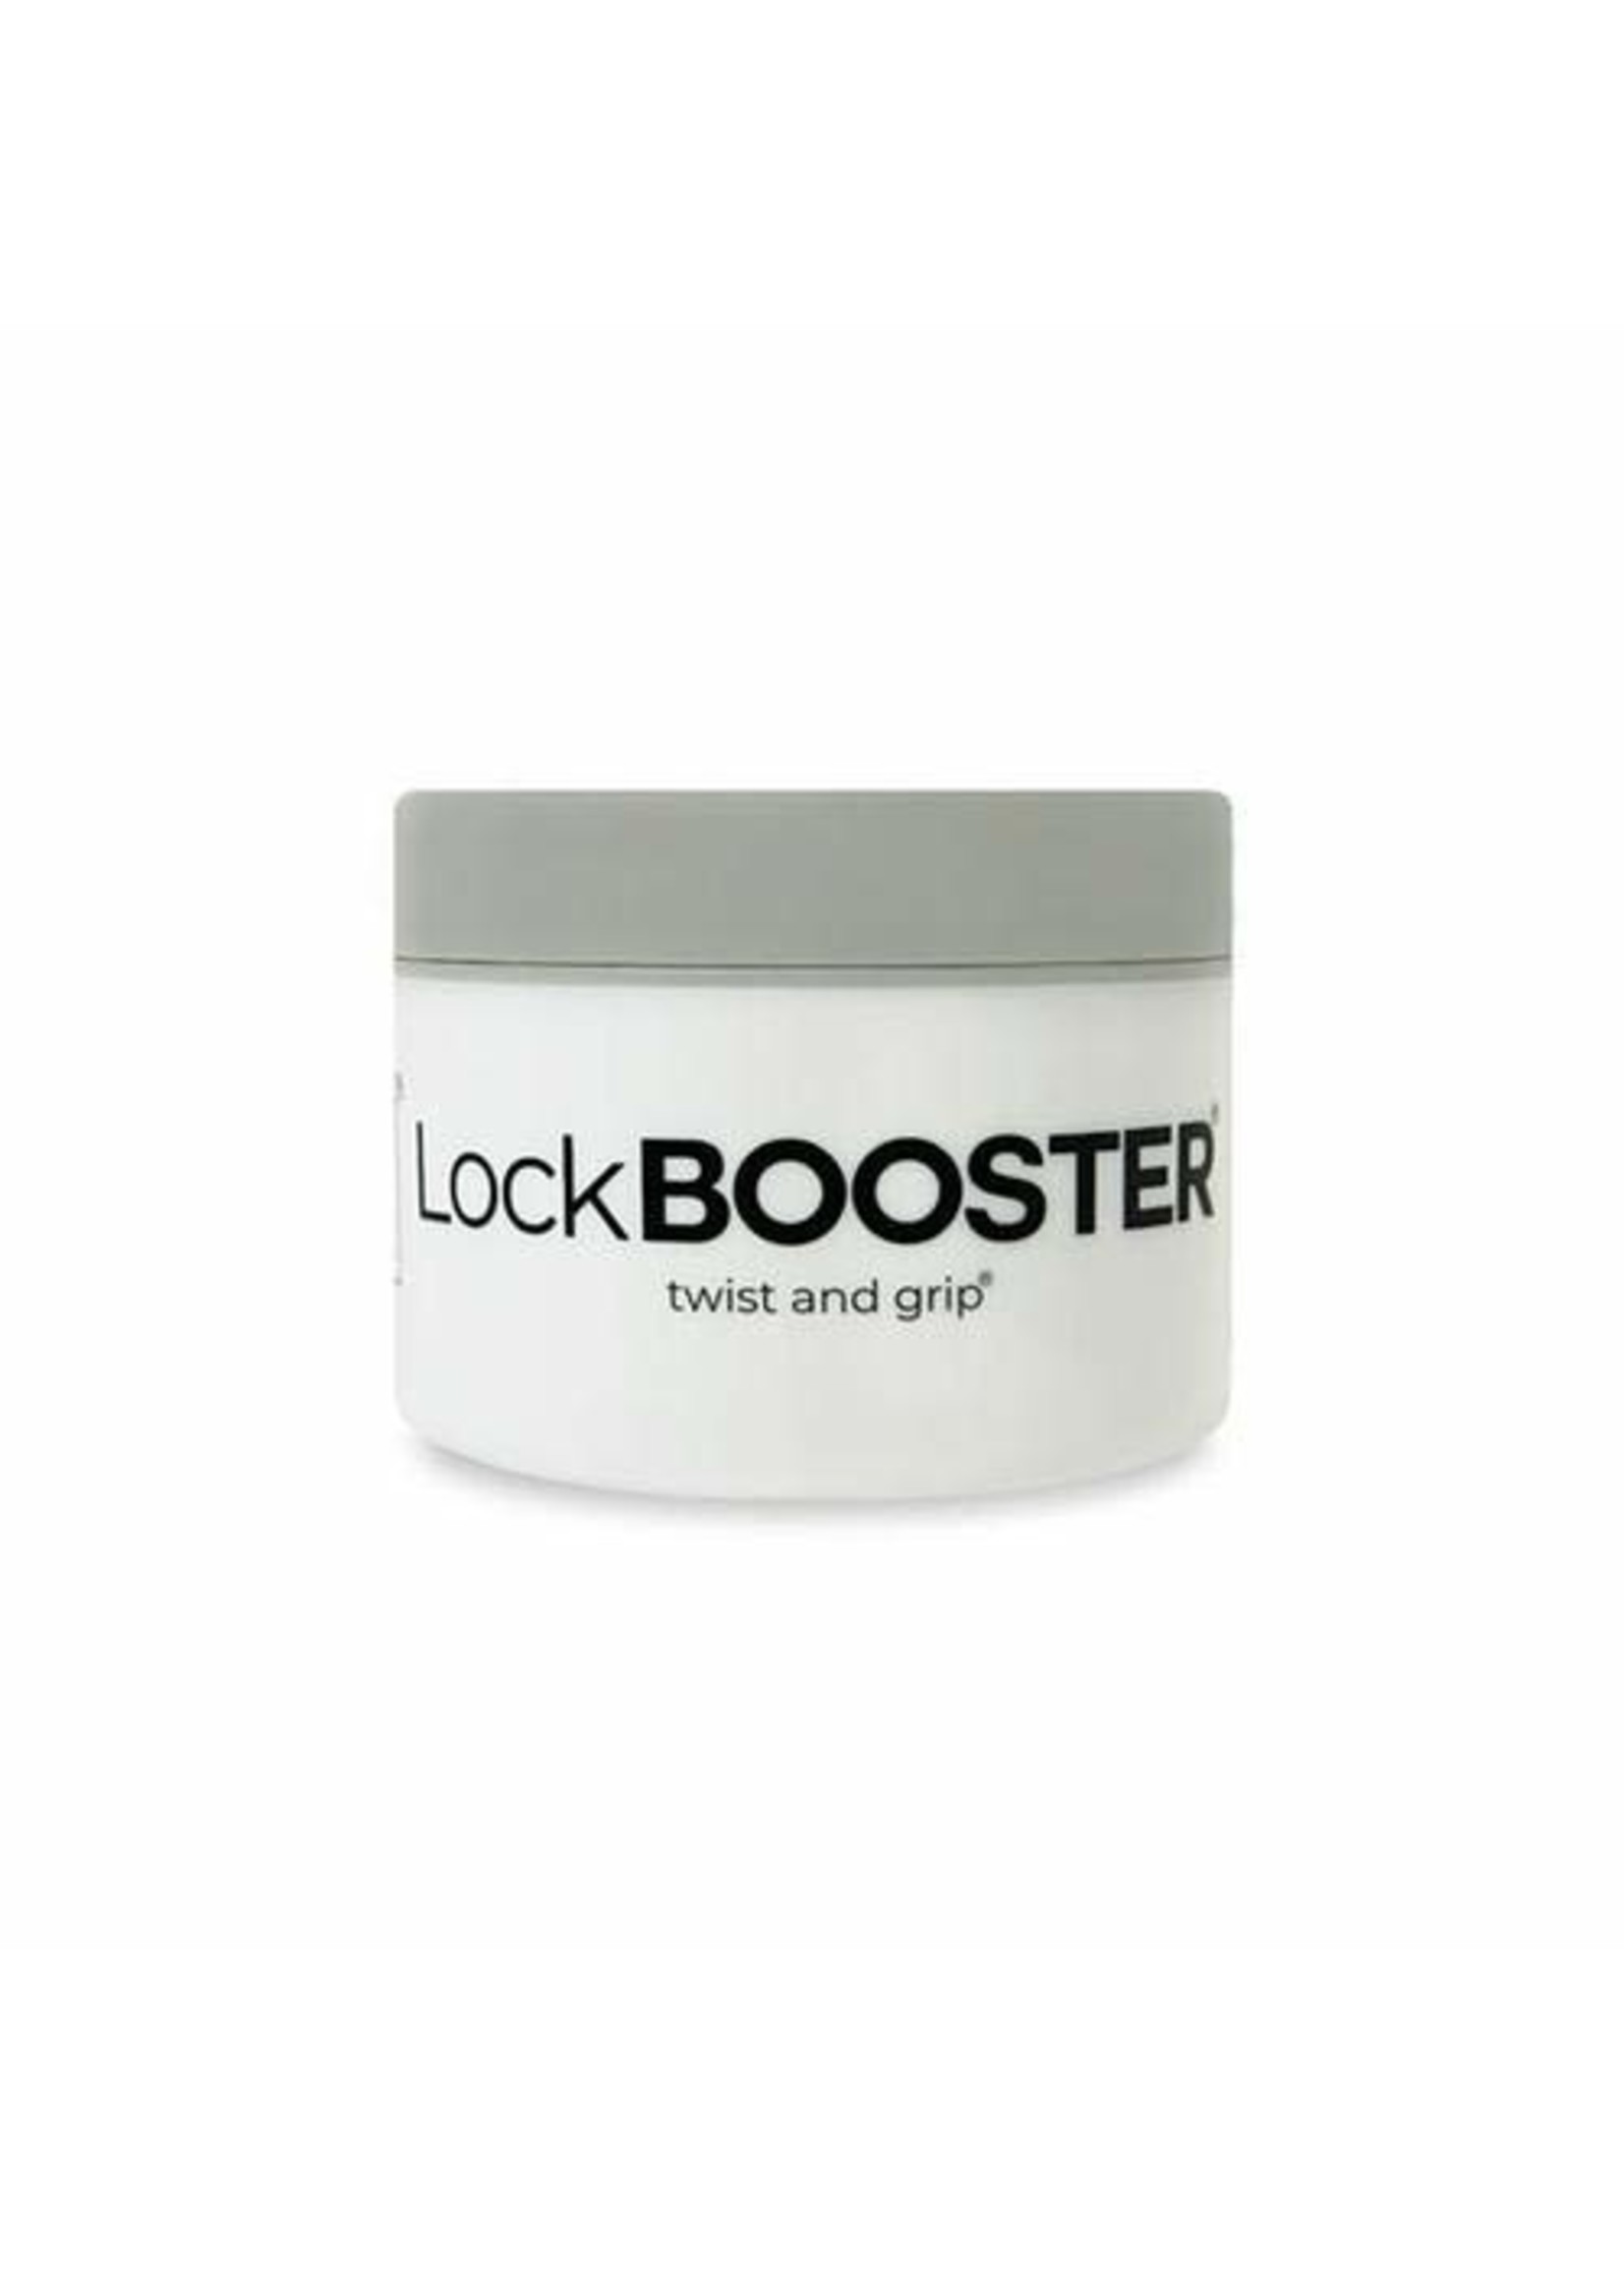 Edge Booster Lock Booster Coconut Oil Grey Top